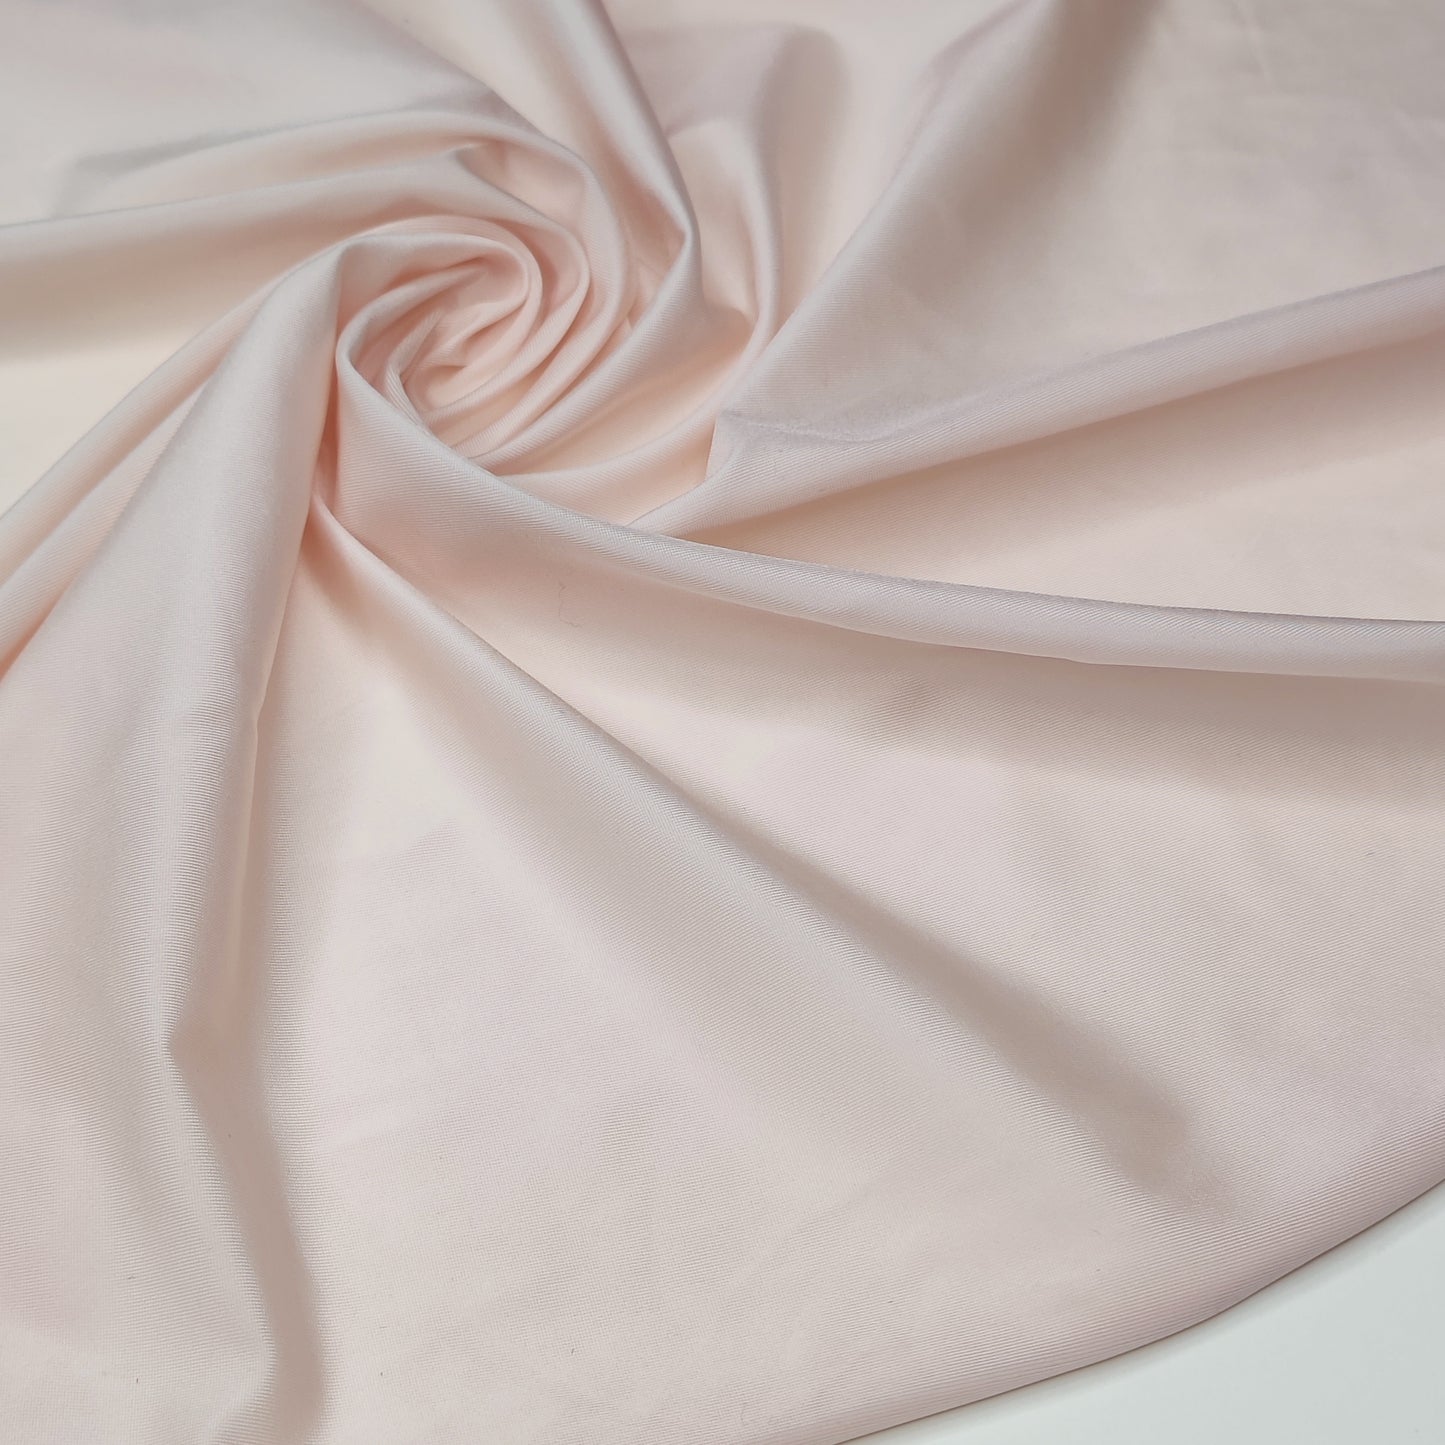 Microfiber, bi-elastic lingerie in peach pink